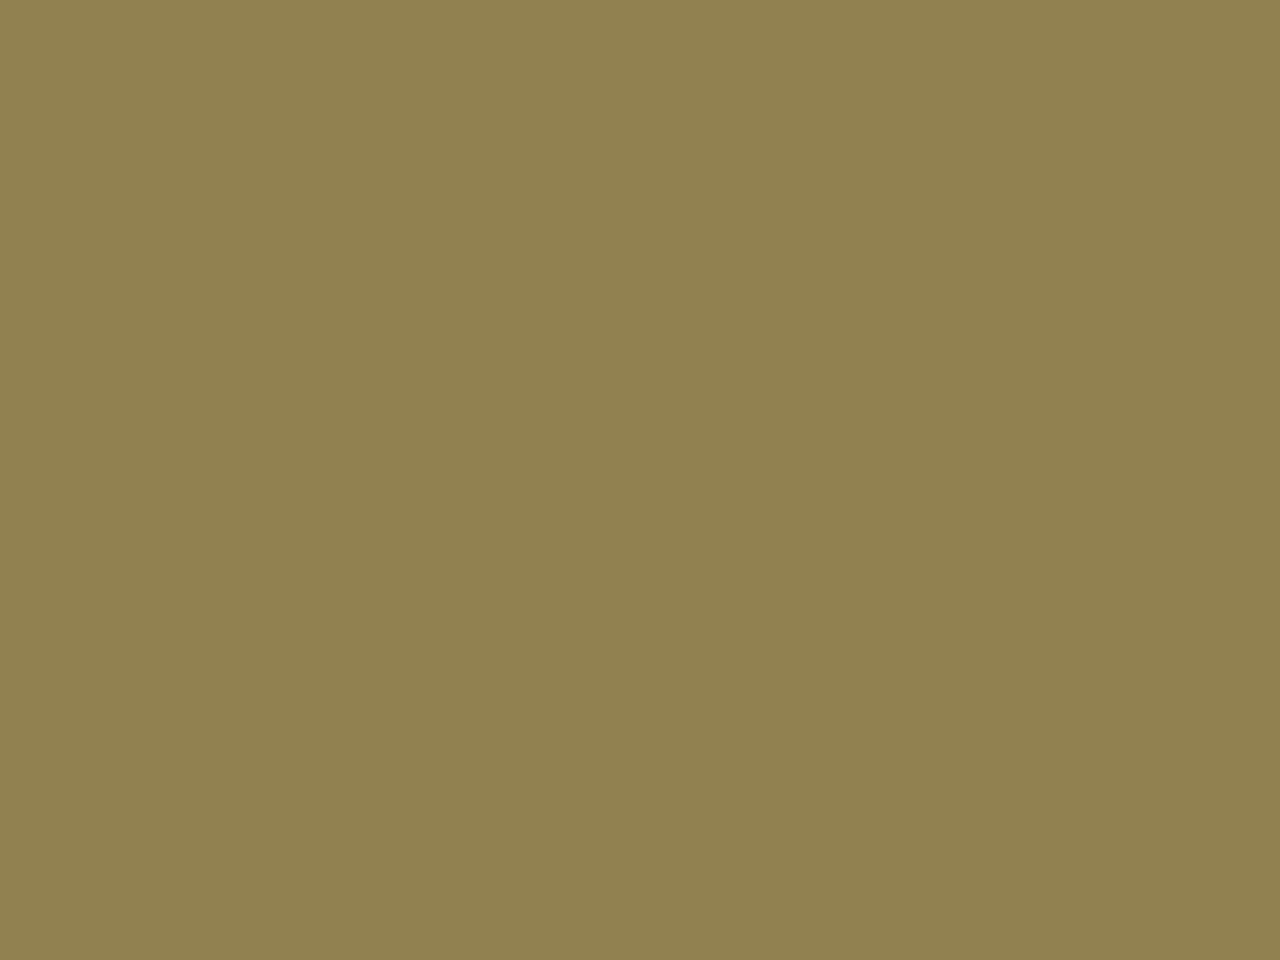 1280x960 Dark Tan Solid Color Background